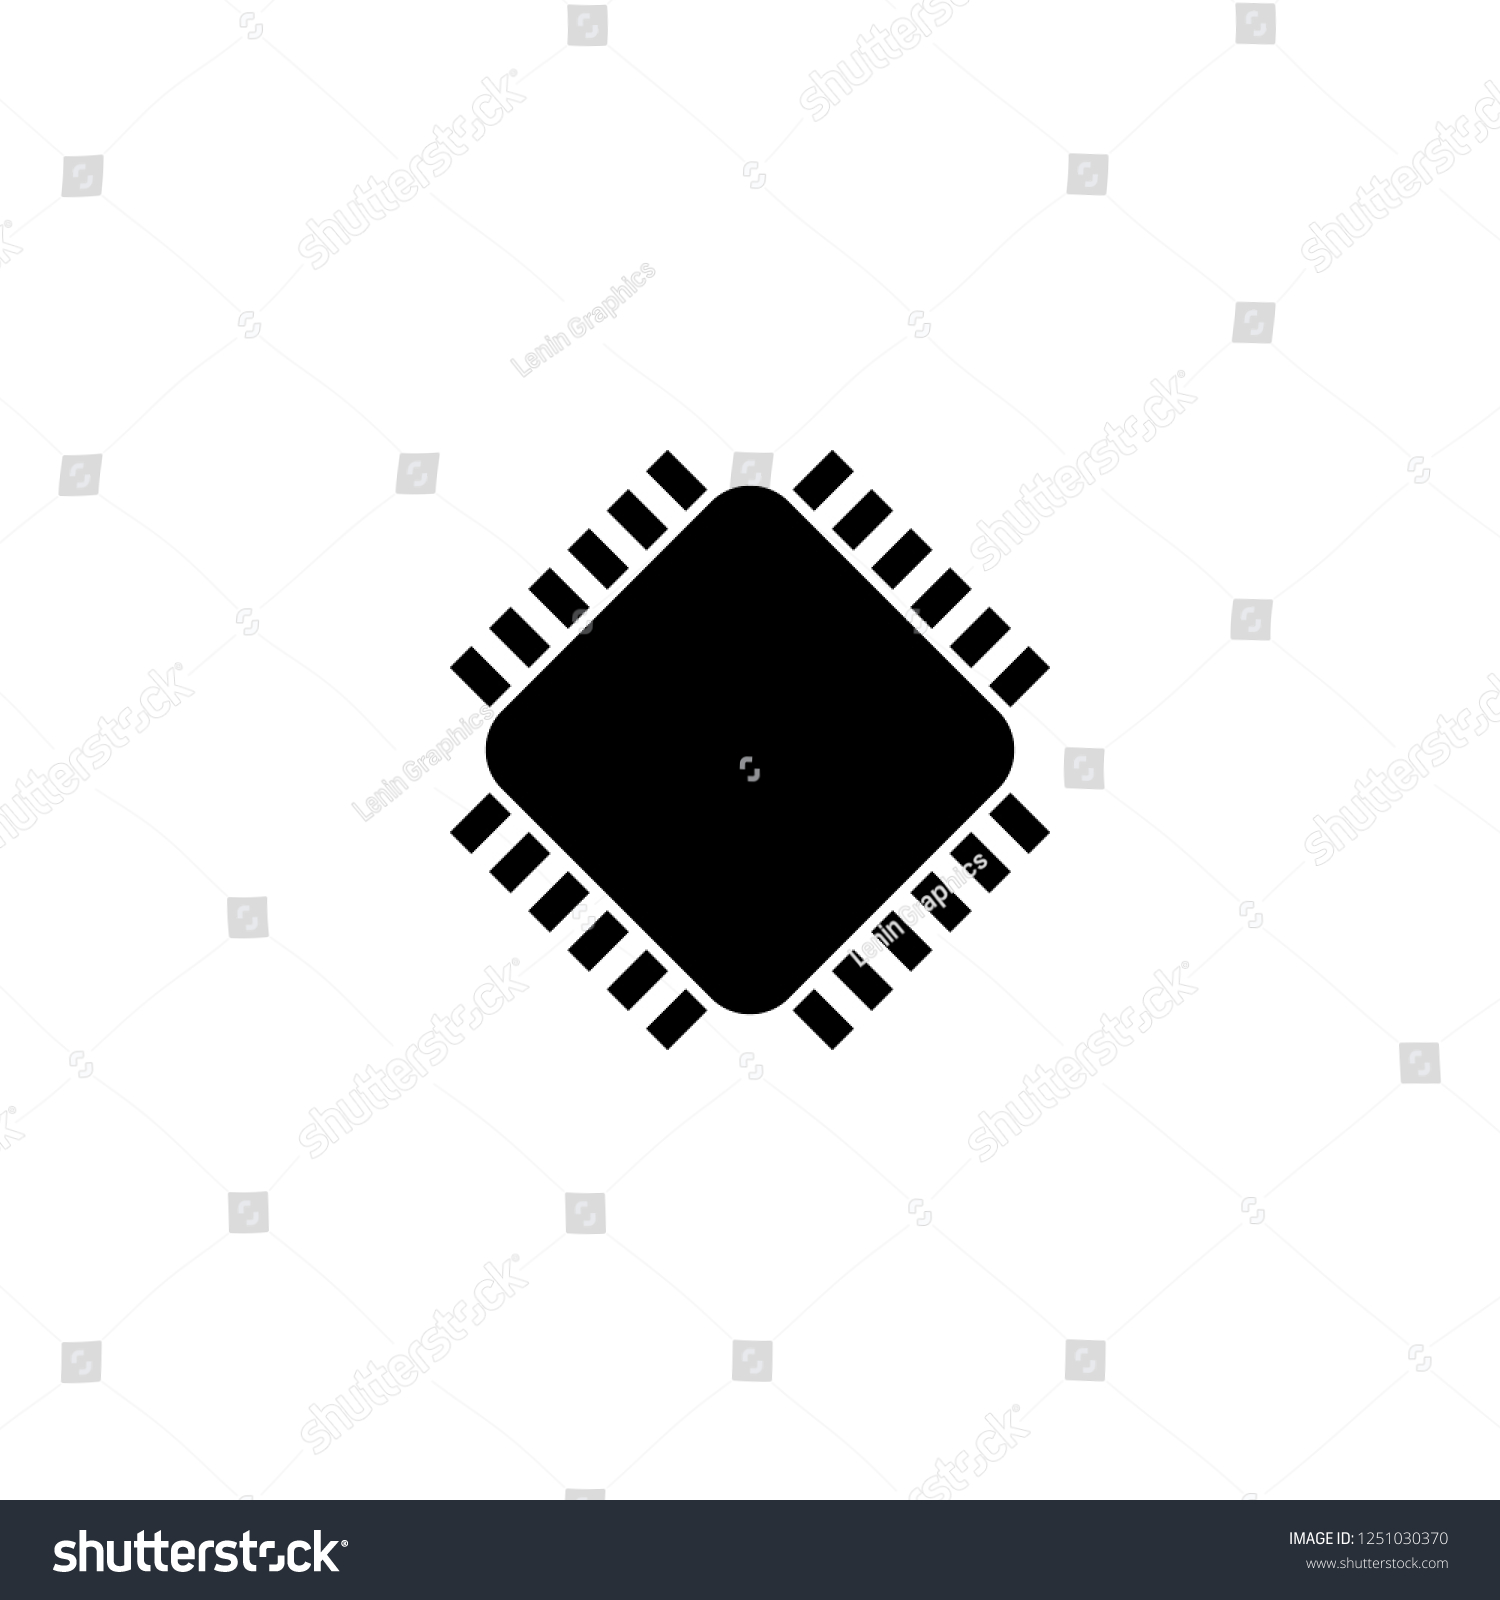 processor vector icon. processor sign on white background. processor icon for web and app #1251030370